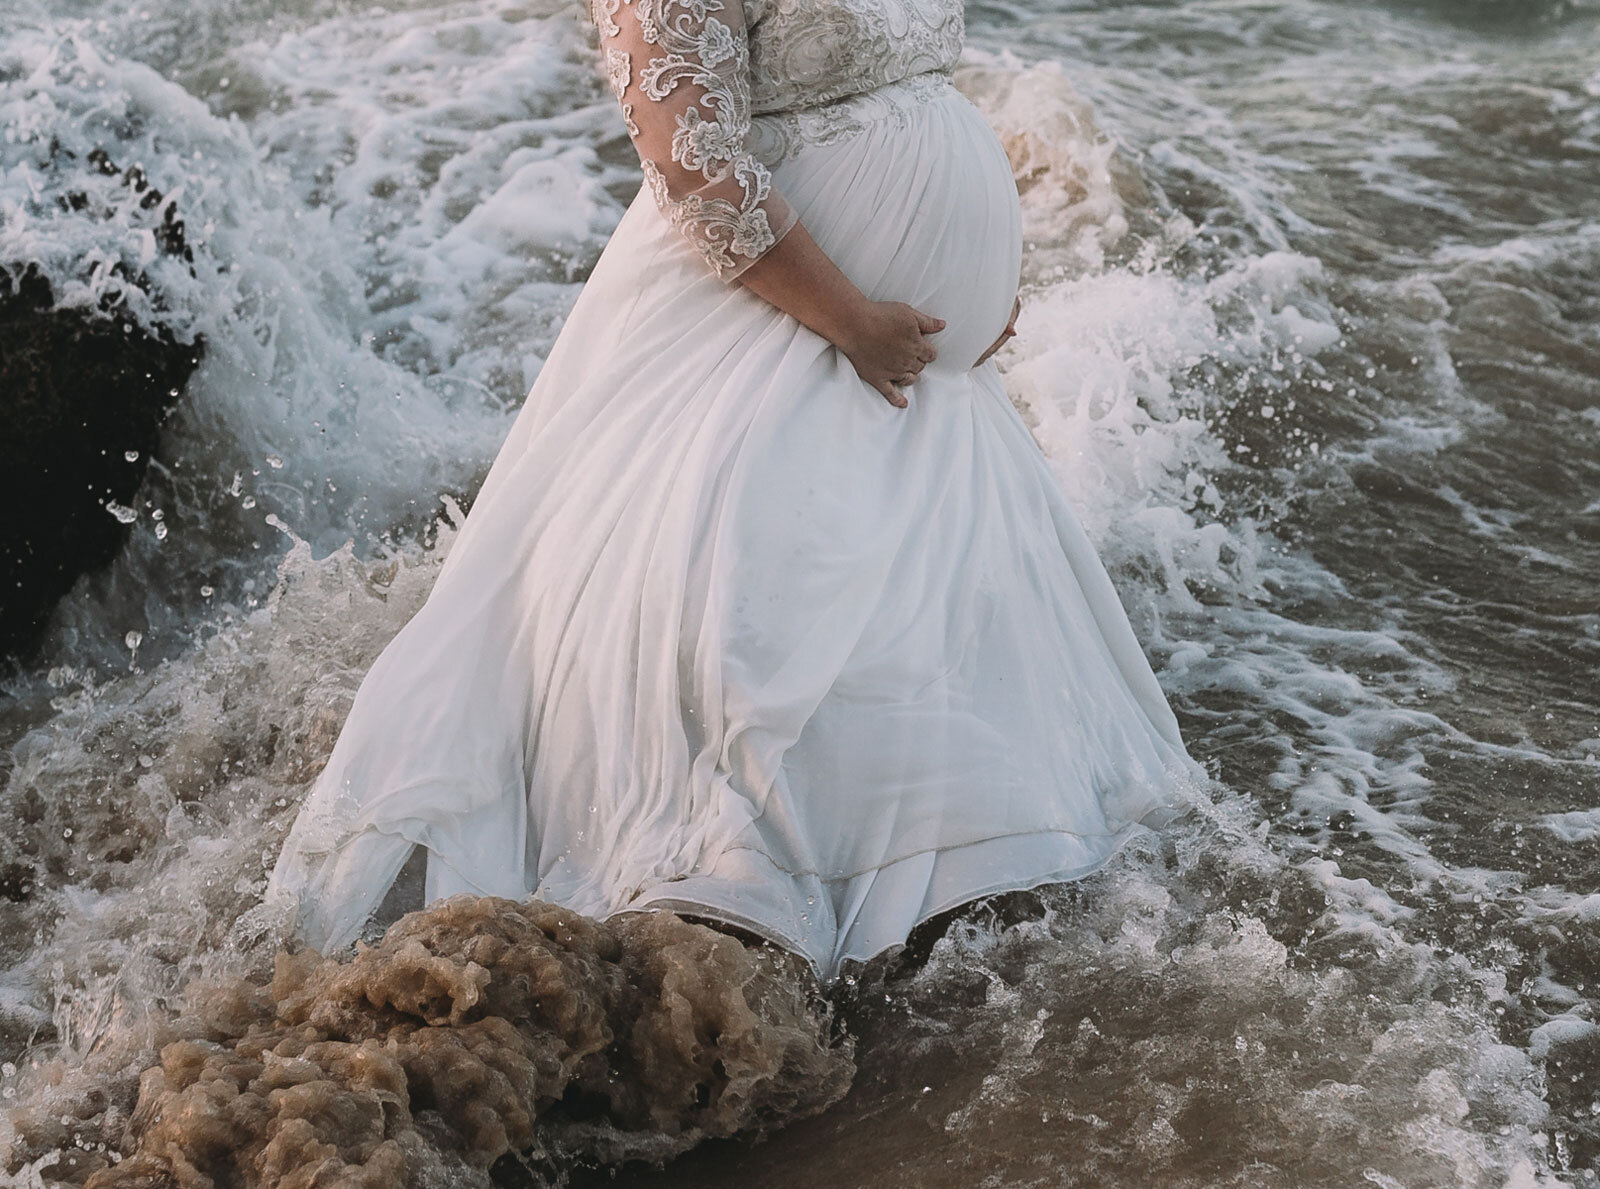 Gold Coast Beach maternity Photography - Elephant Rock, Blury Photography